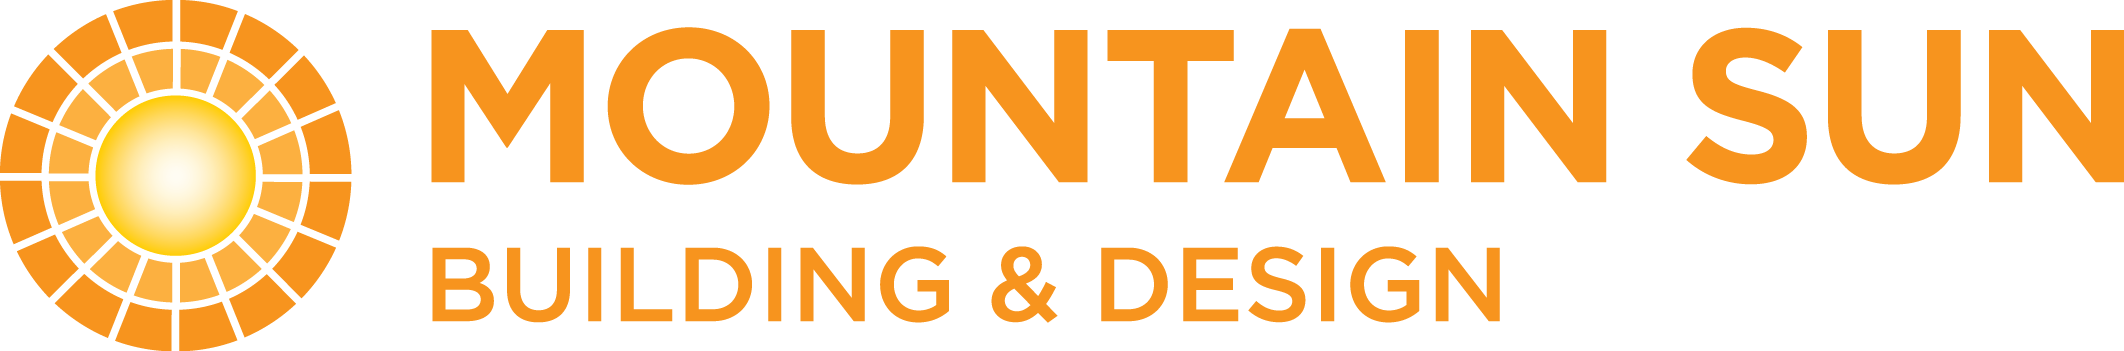 Mountain Sun Building & Design, LLC company logo